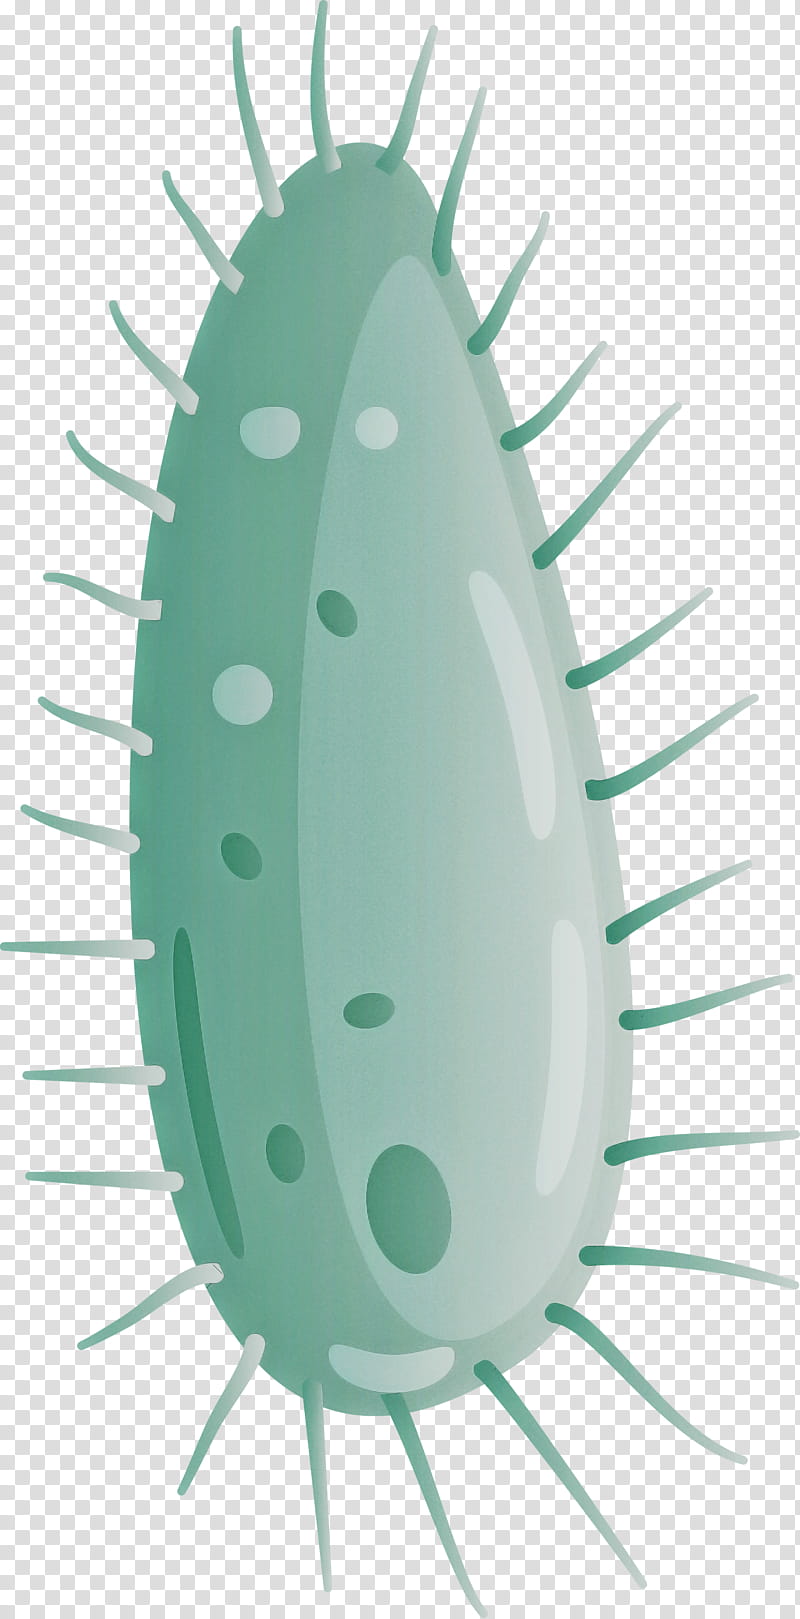 Virus, Cactus, Oval, Plant transparent background PNG clipart